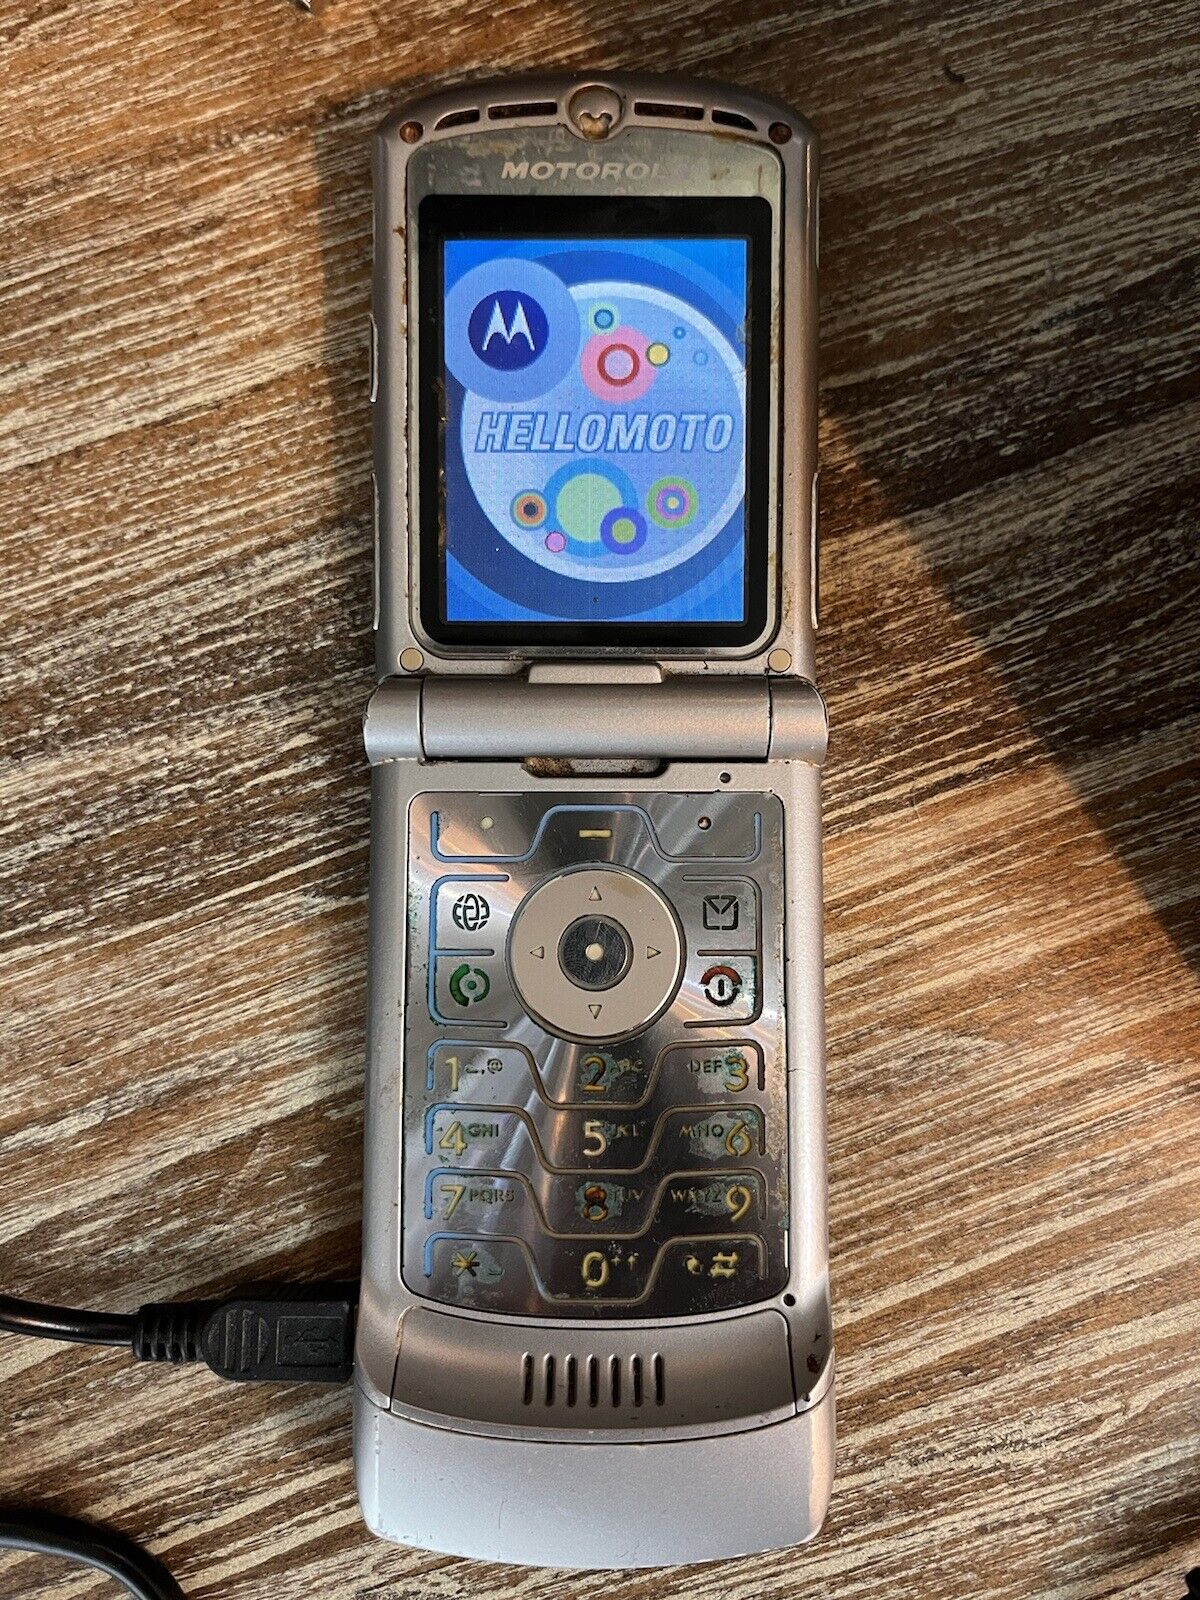 Motorola Razr V3 CINGULAR Silver